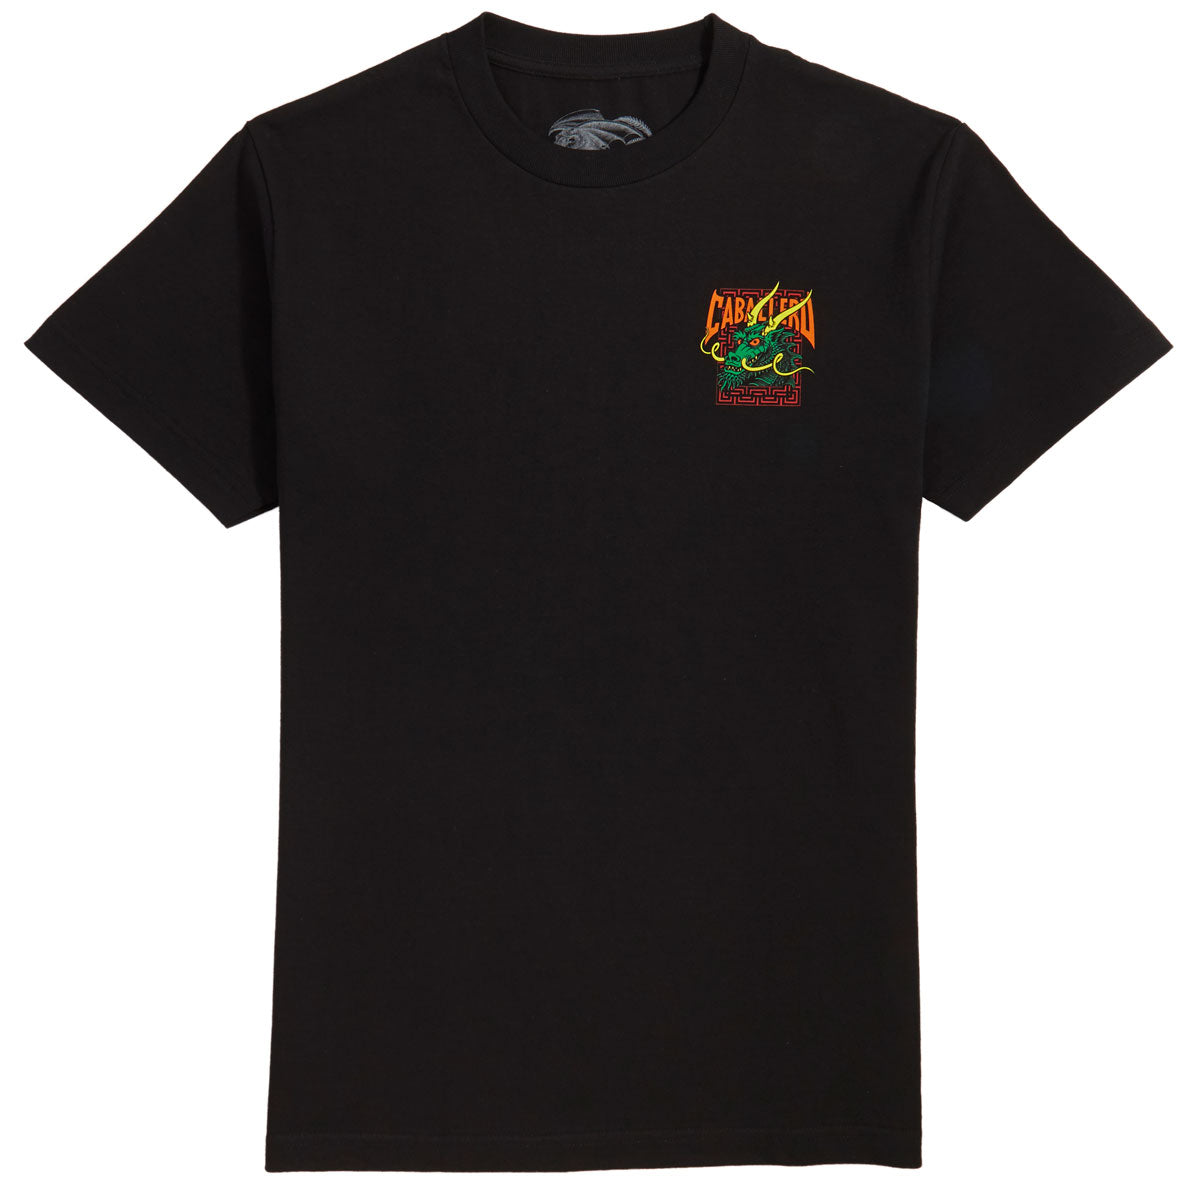 Powell-Peralta Cab Street Dragon T-Shirt - Black image 1